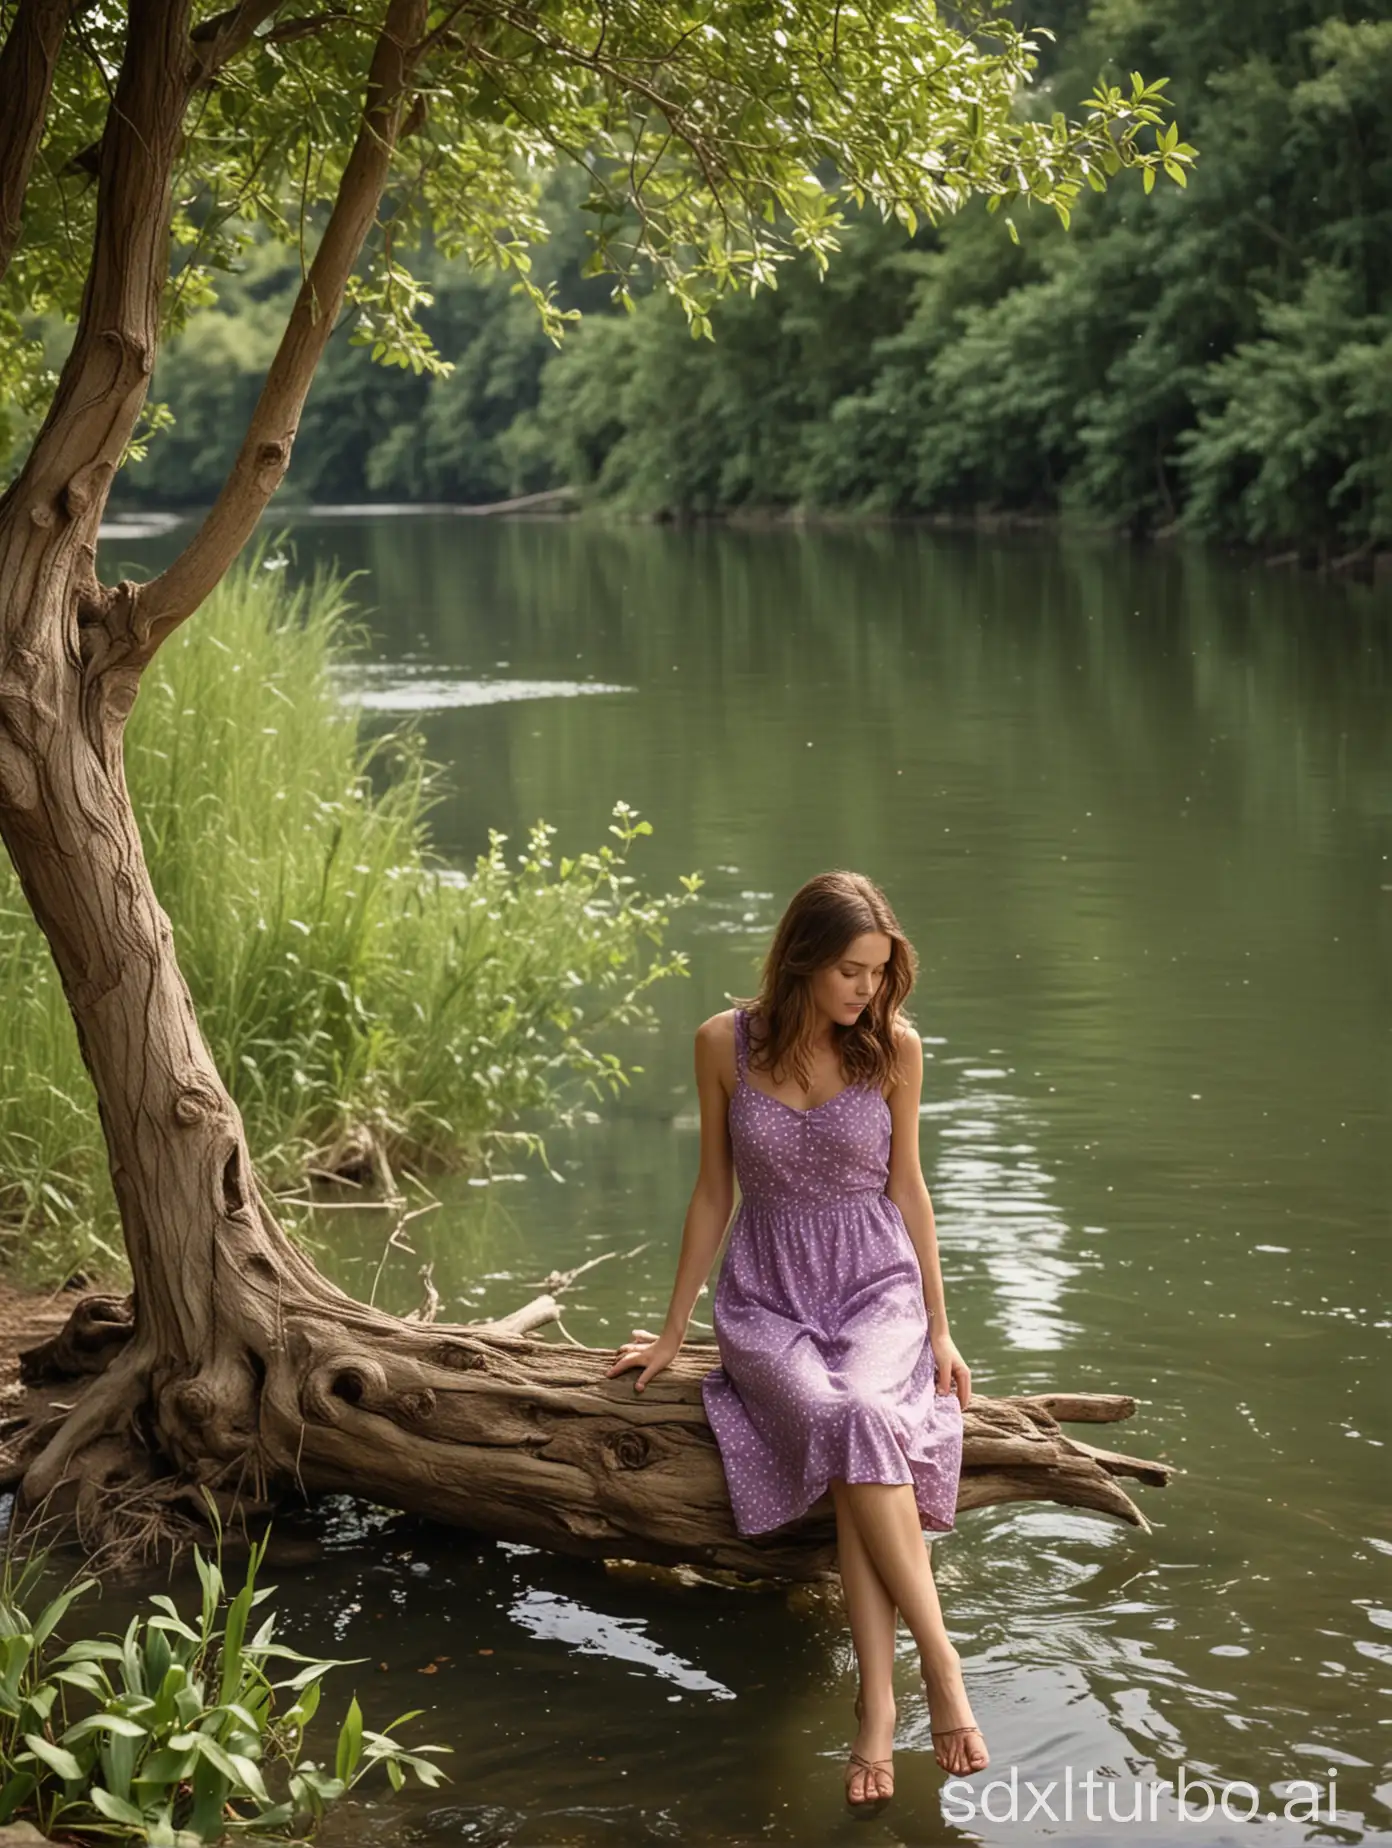 Woman-in-Purple-Sundress-Sitting-Alongside-a-Tranquil-River